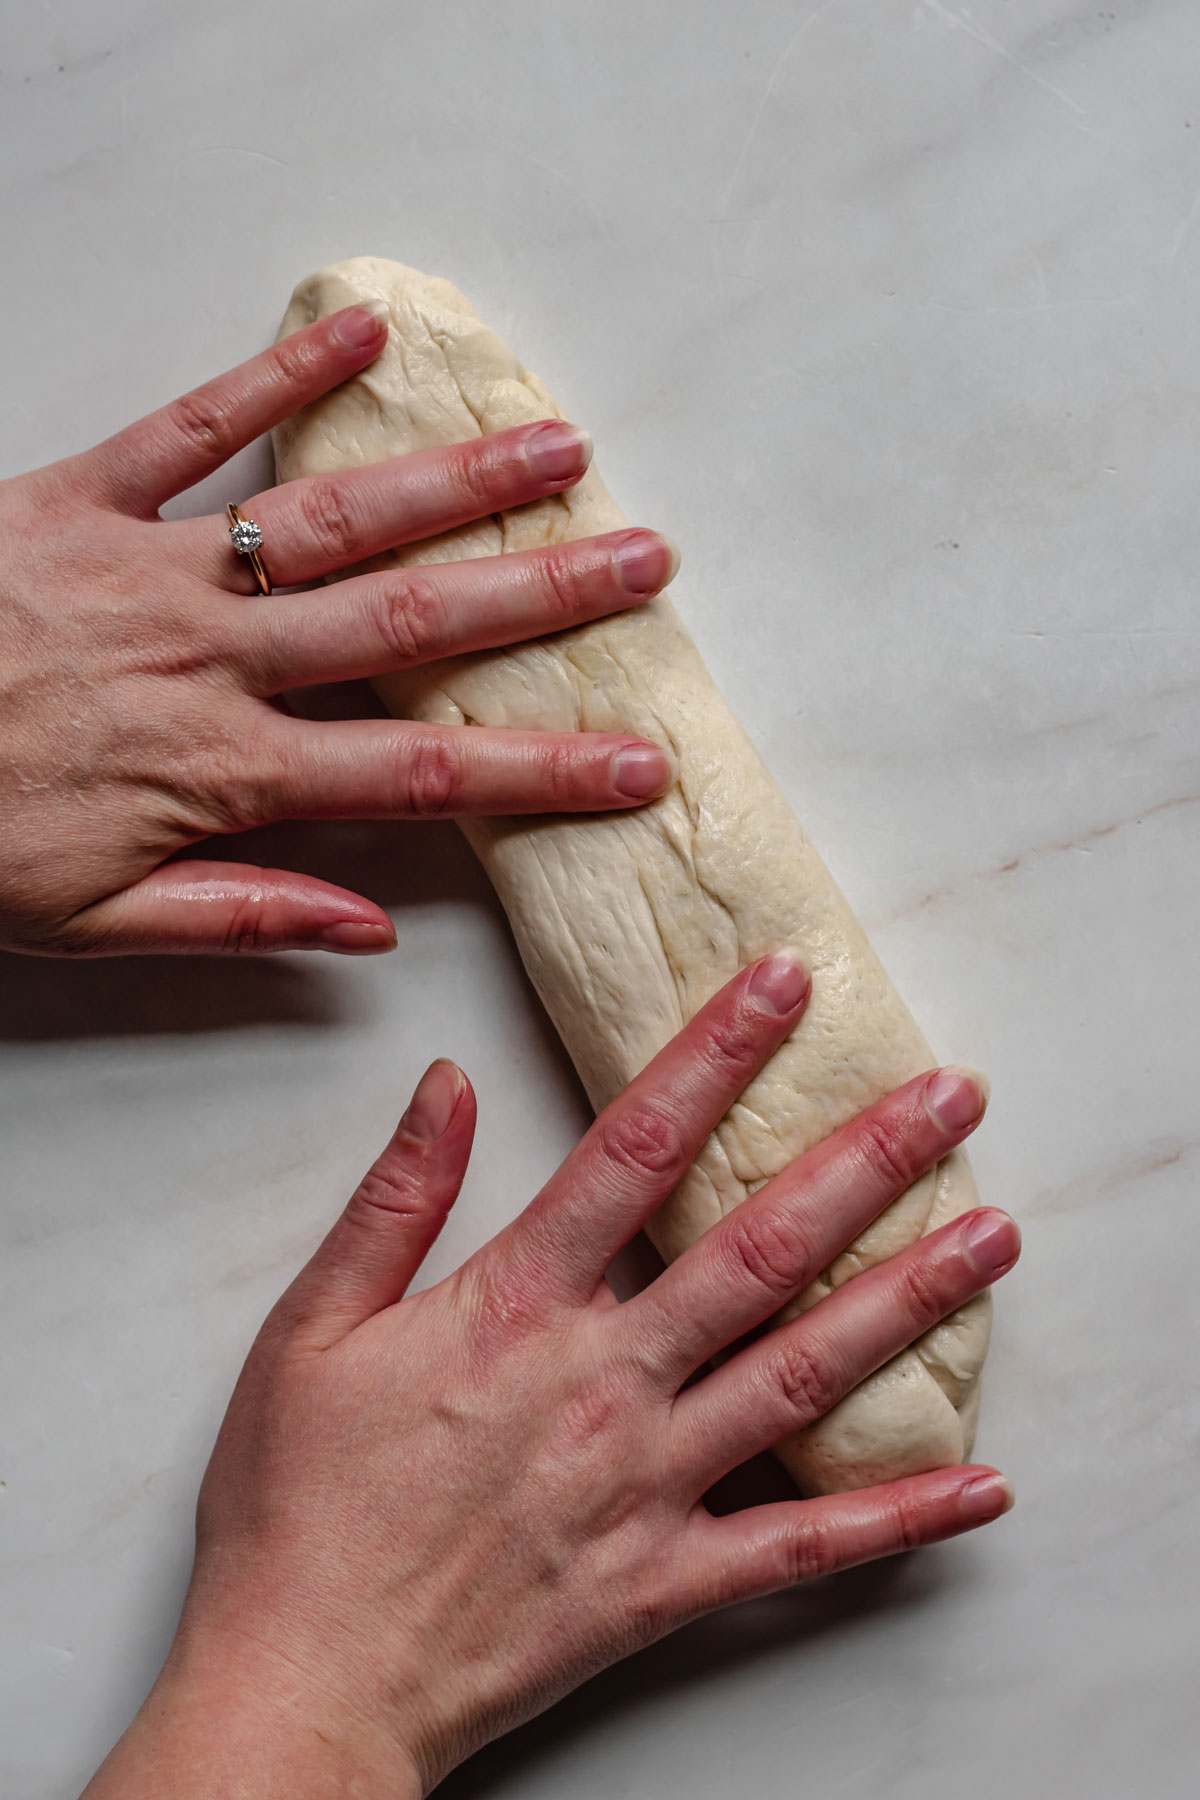 Two hands roll out a piece of pretzel dough.